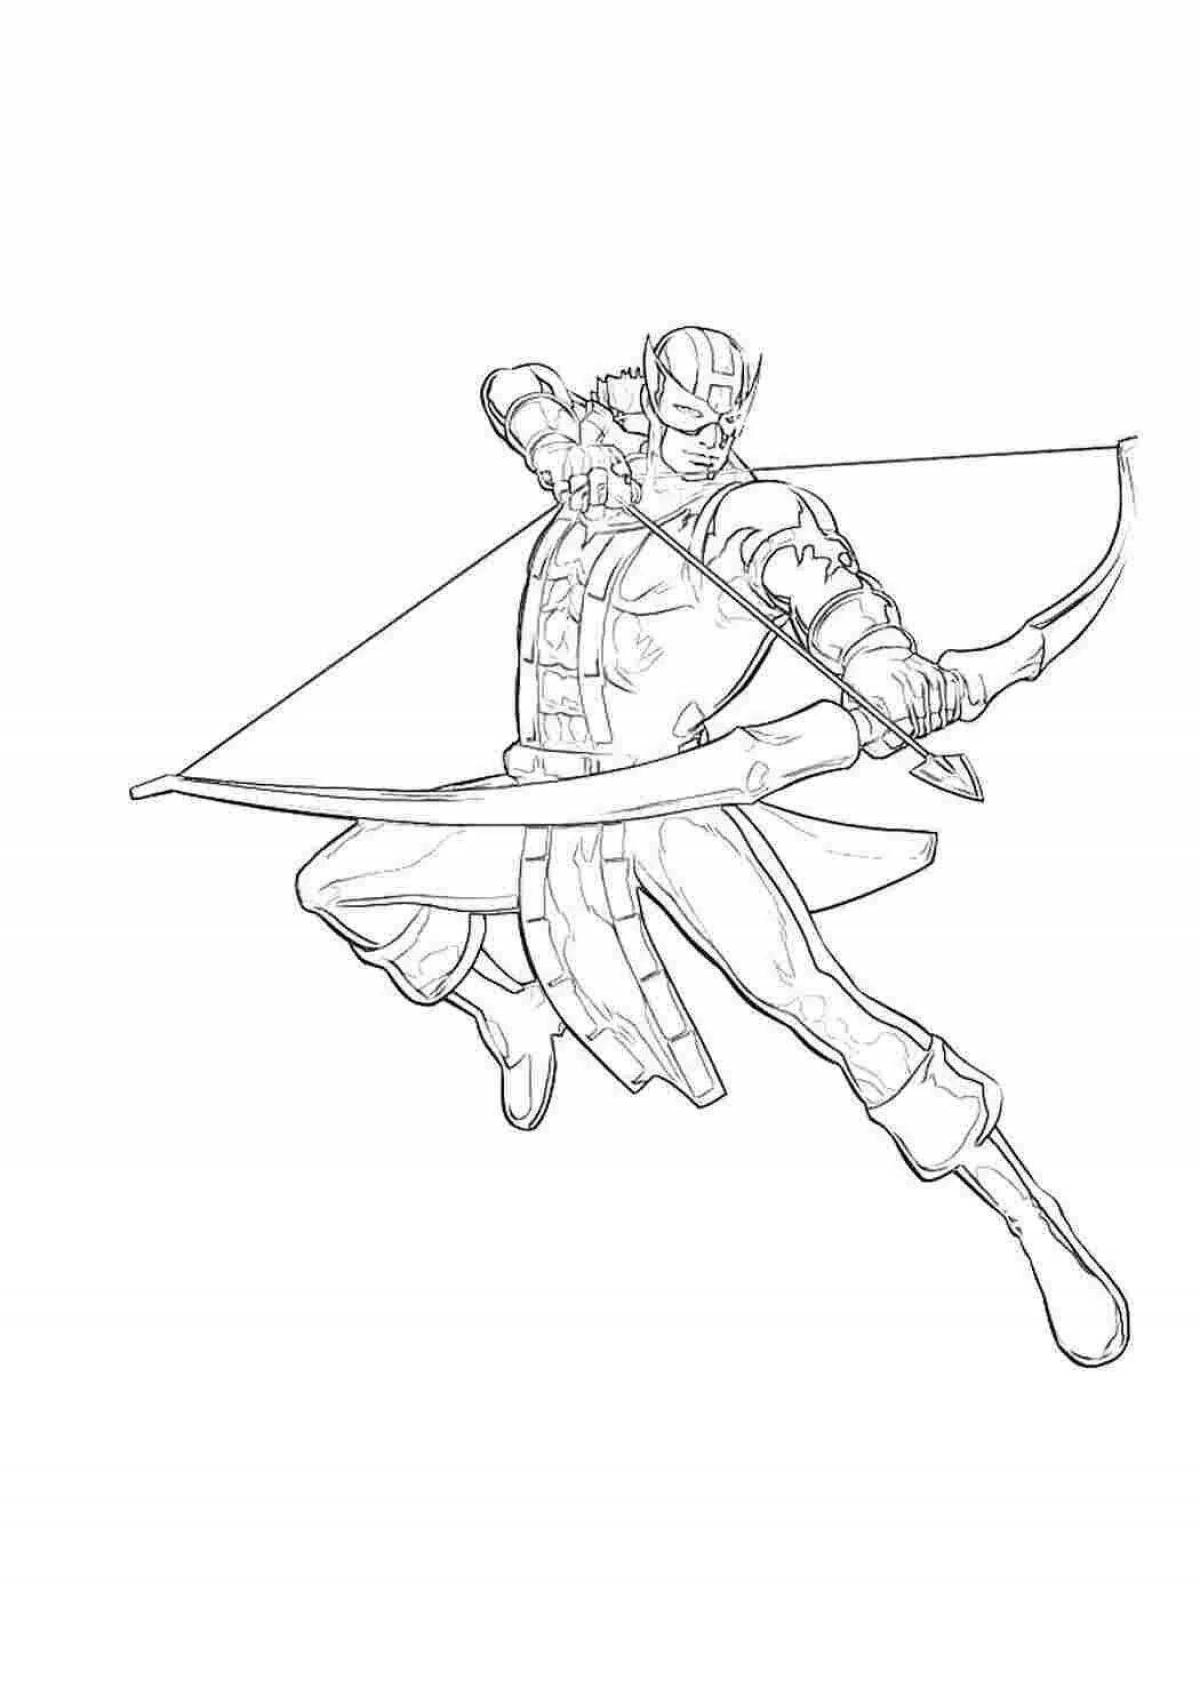 Coloring page graceful archer